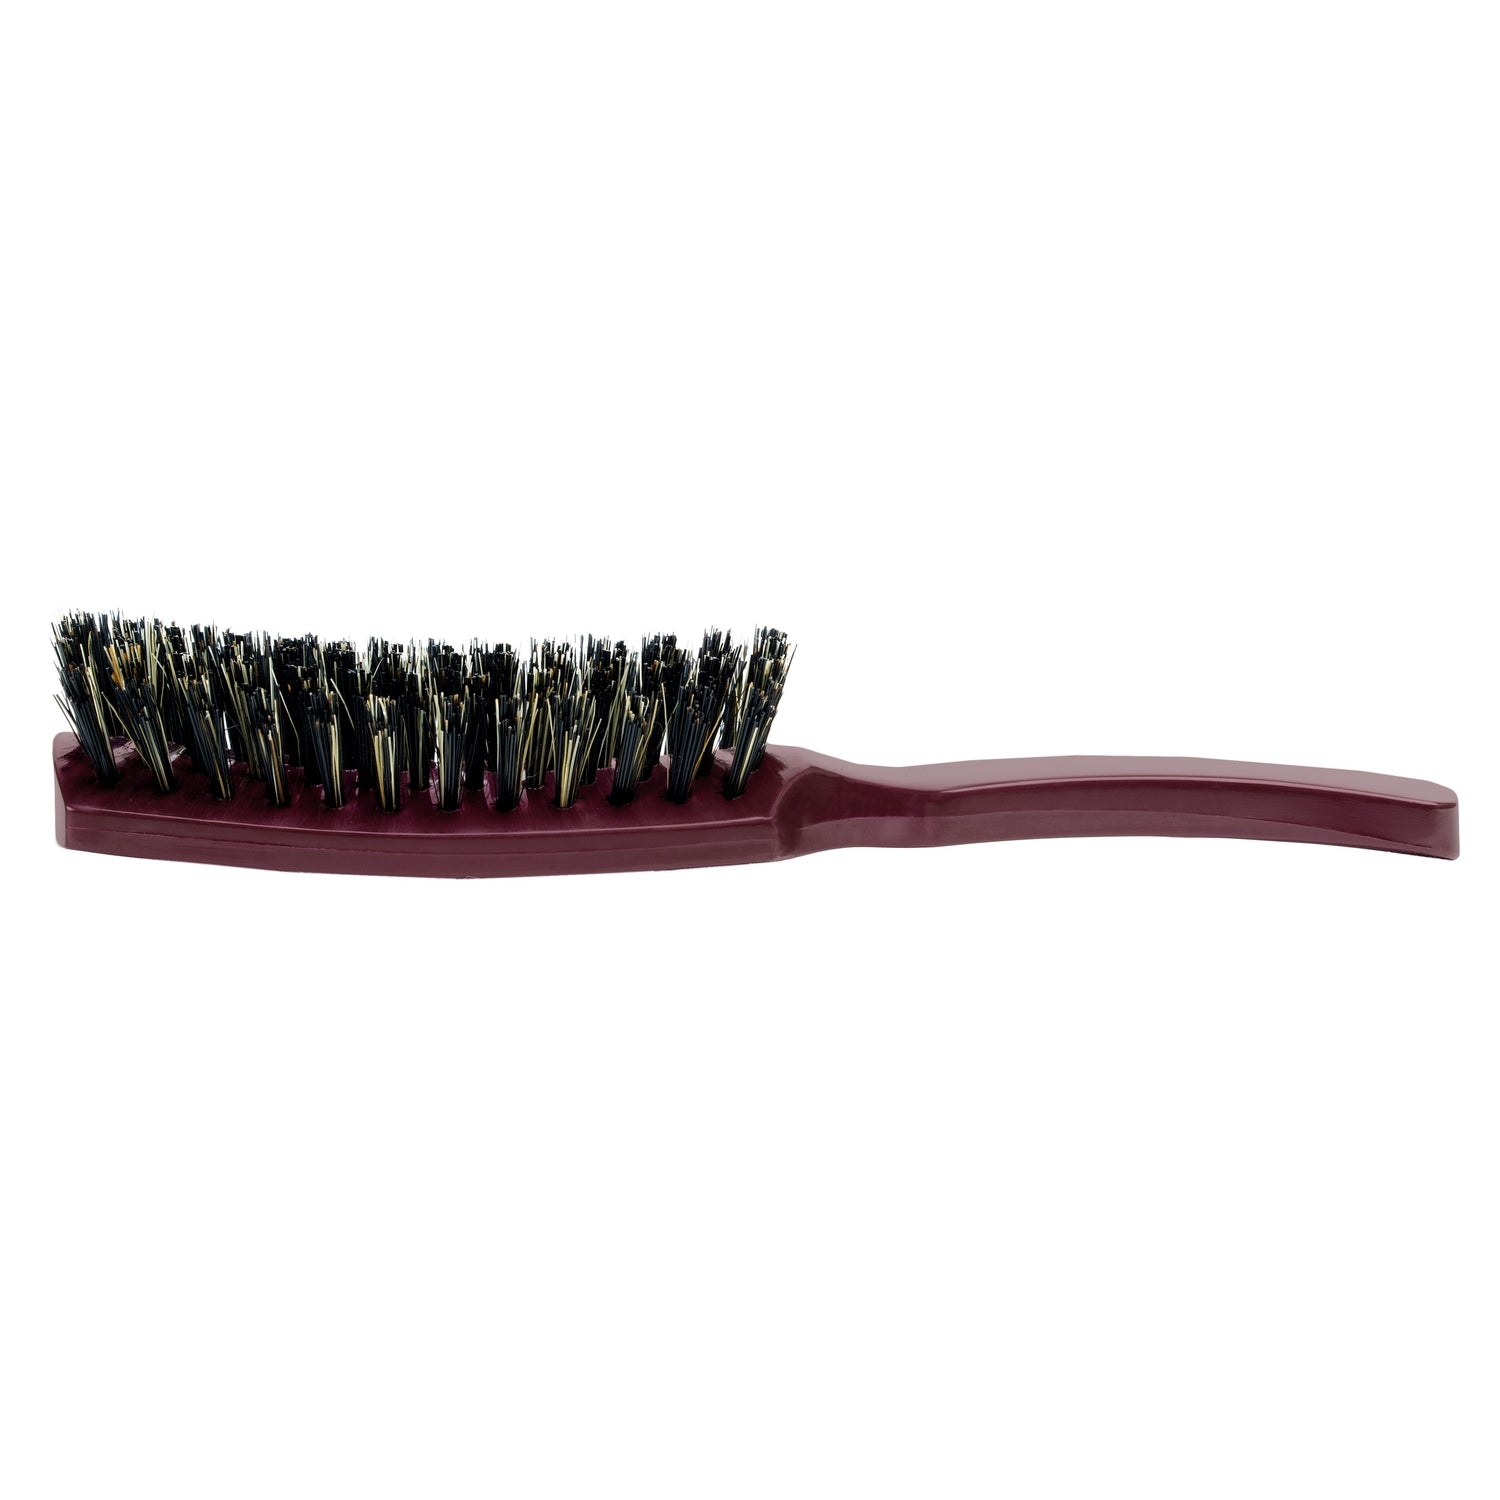 Boar Bristle & Nylon Styling Brush  Brush Handle is FSC® (C113128